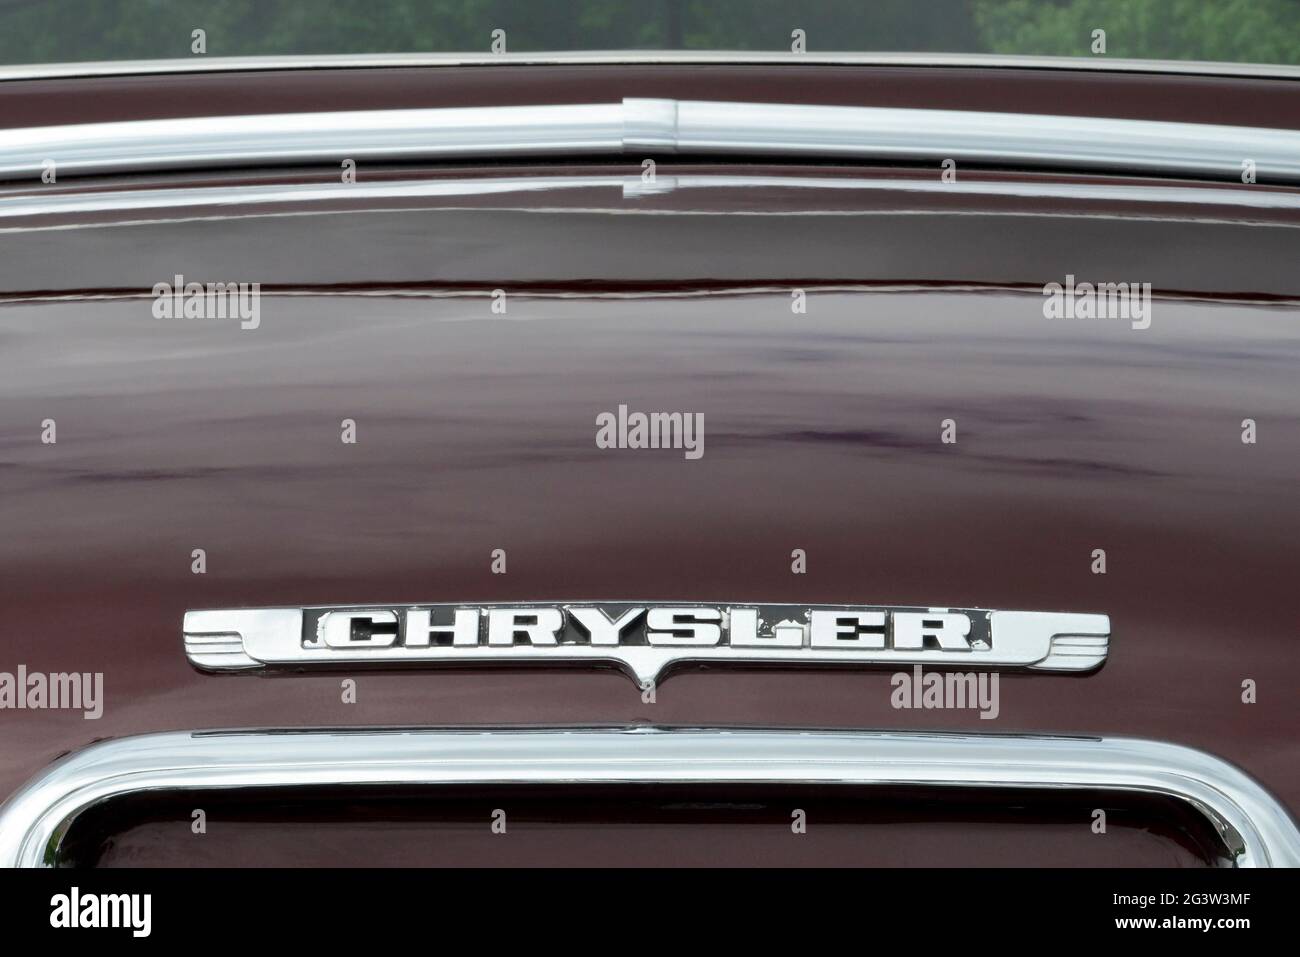 The Chrysler emblem on the trunk lid of a 1949 Chrysler Windsor sedan. Stock Photo